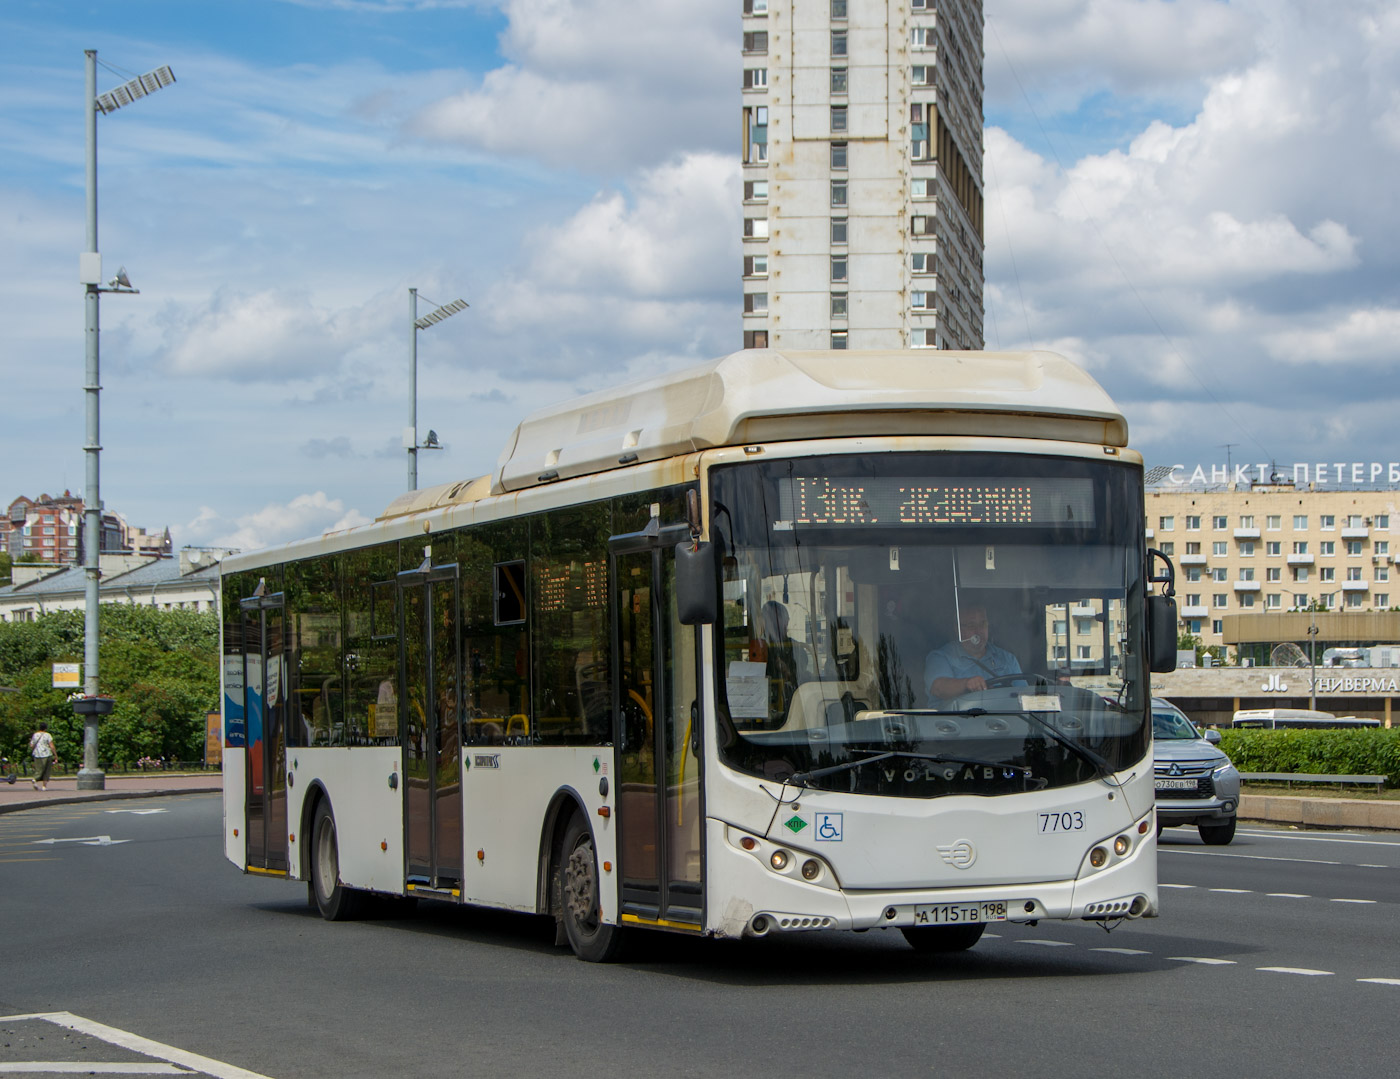 Sanktpēterburga, Volgabus-5270.G0 № 7703